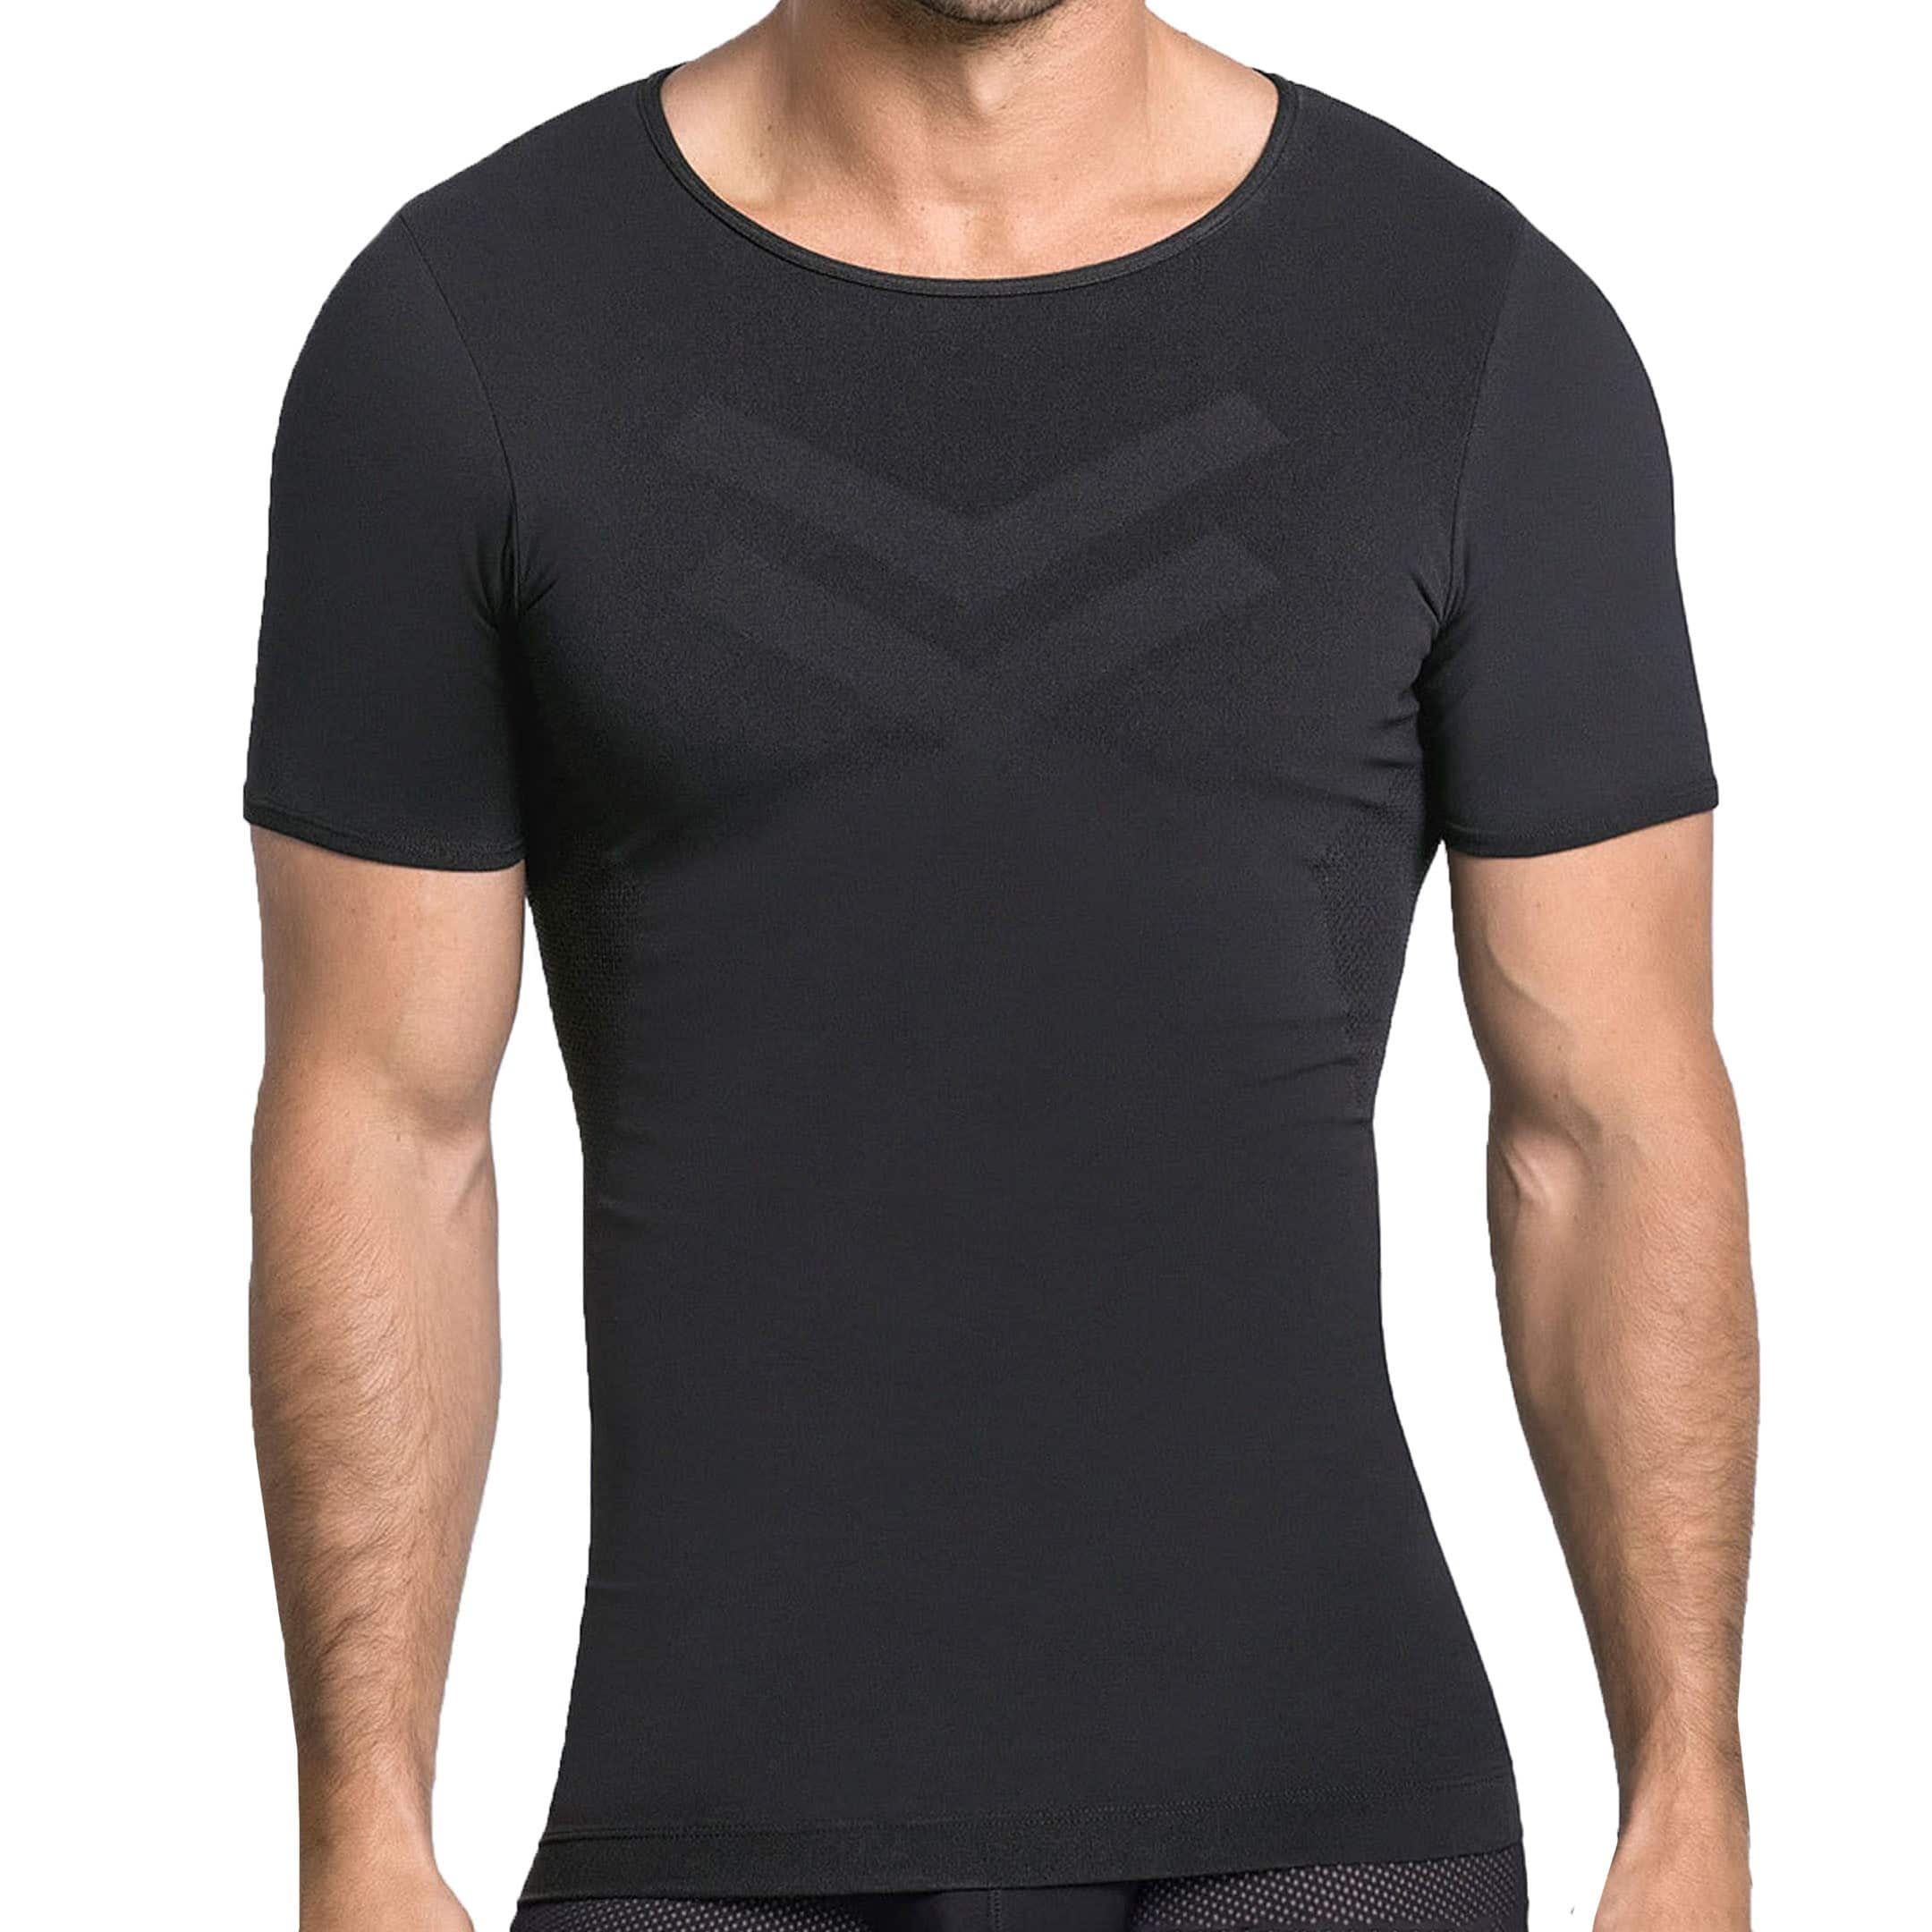 https://www.inderwear.com/144088/microfiber-slimming-compression-t-shirt-black-leo.jpg